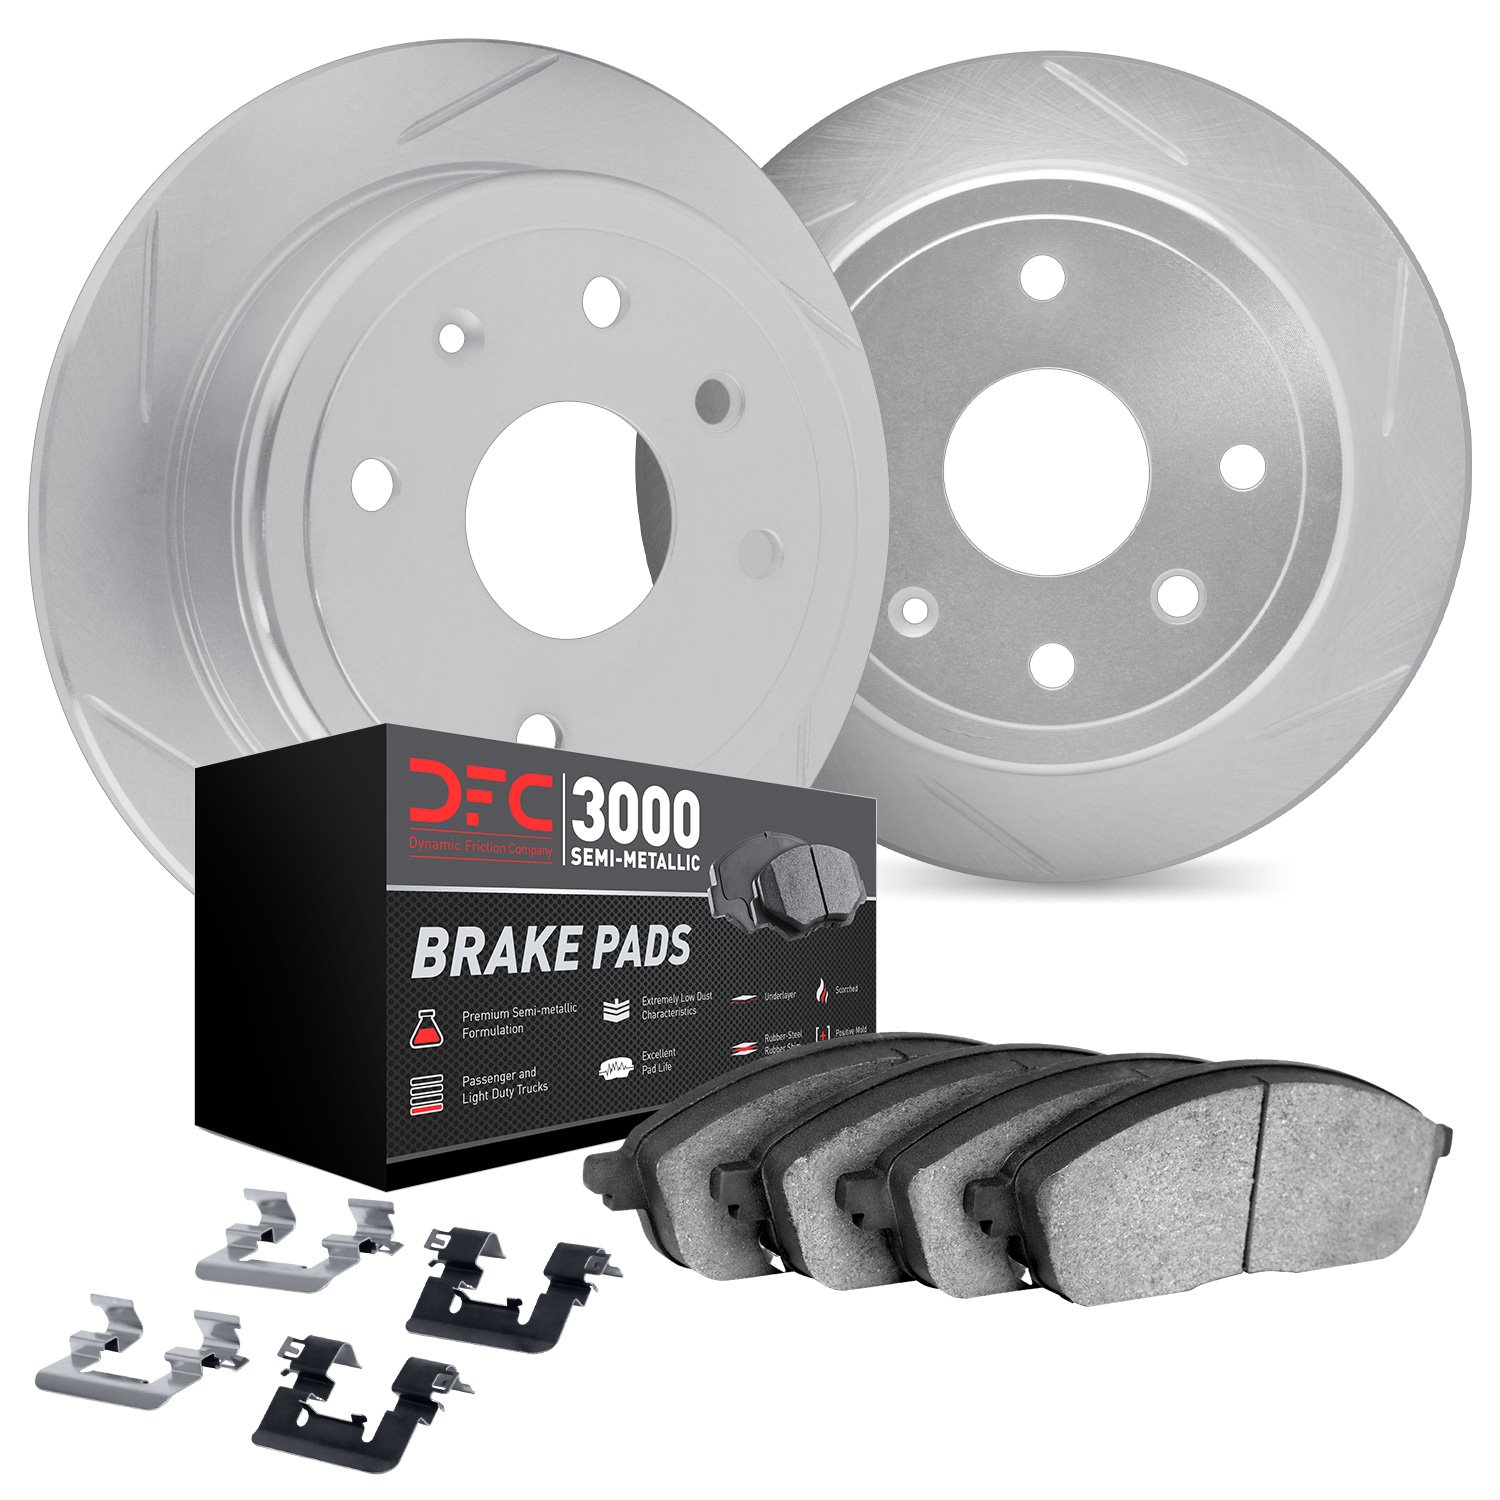 5112-54179 Slotted Brake Rotors with 3000-Series Semi-Metallic Brake Pads Kit & Hardware [Silver], 2013-2018 Ford/Lincoln/Mercur